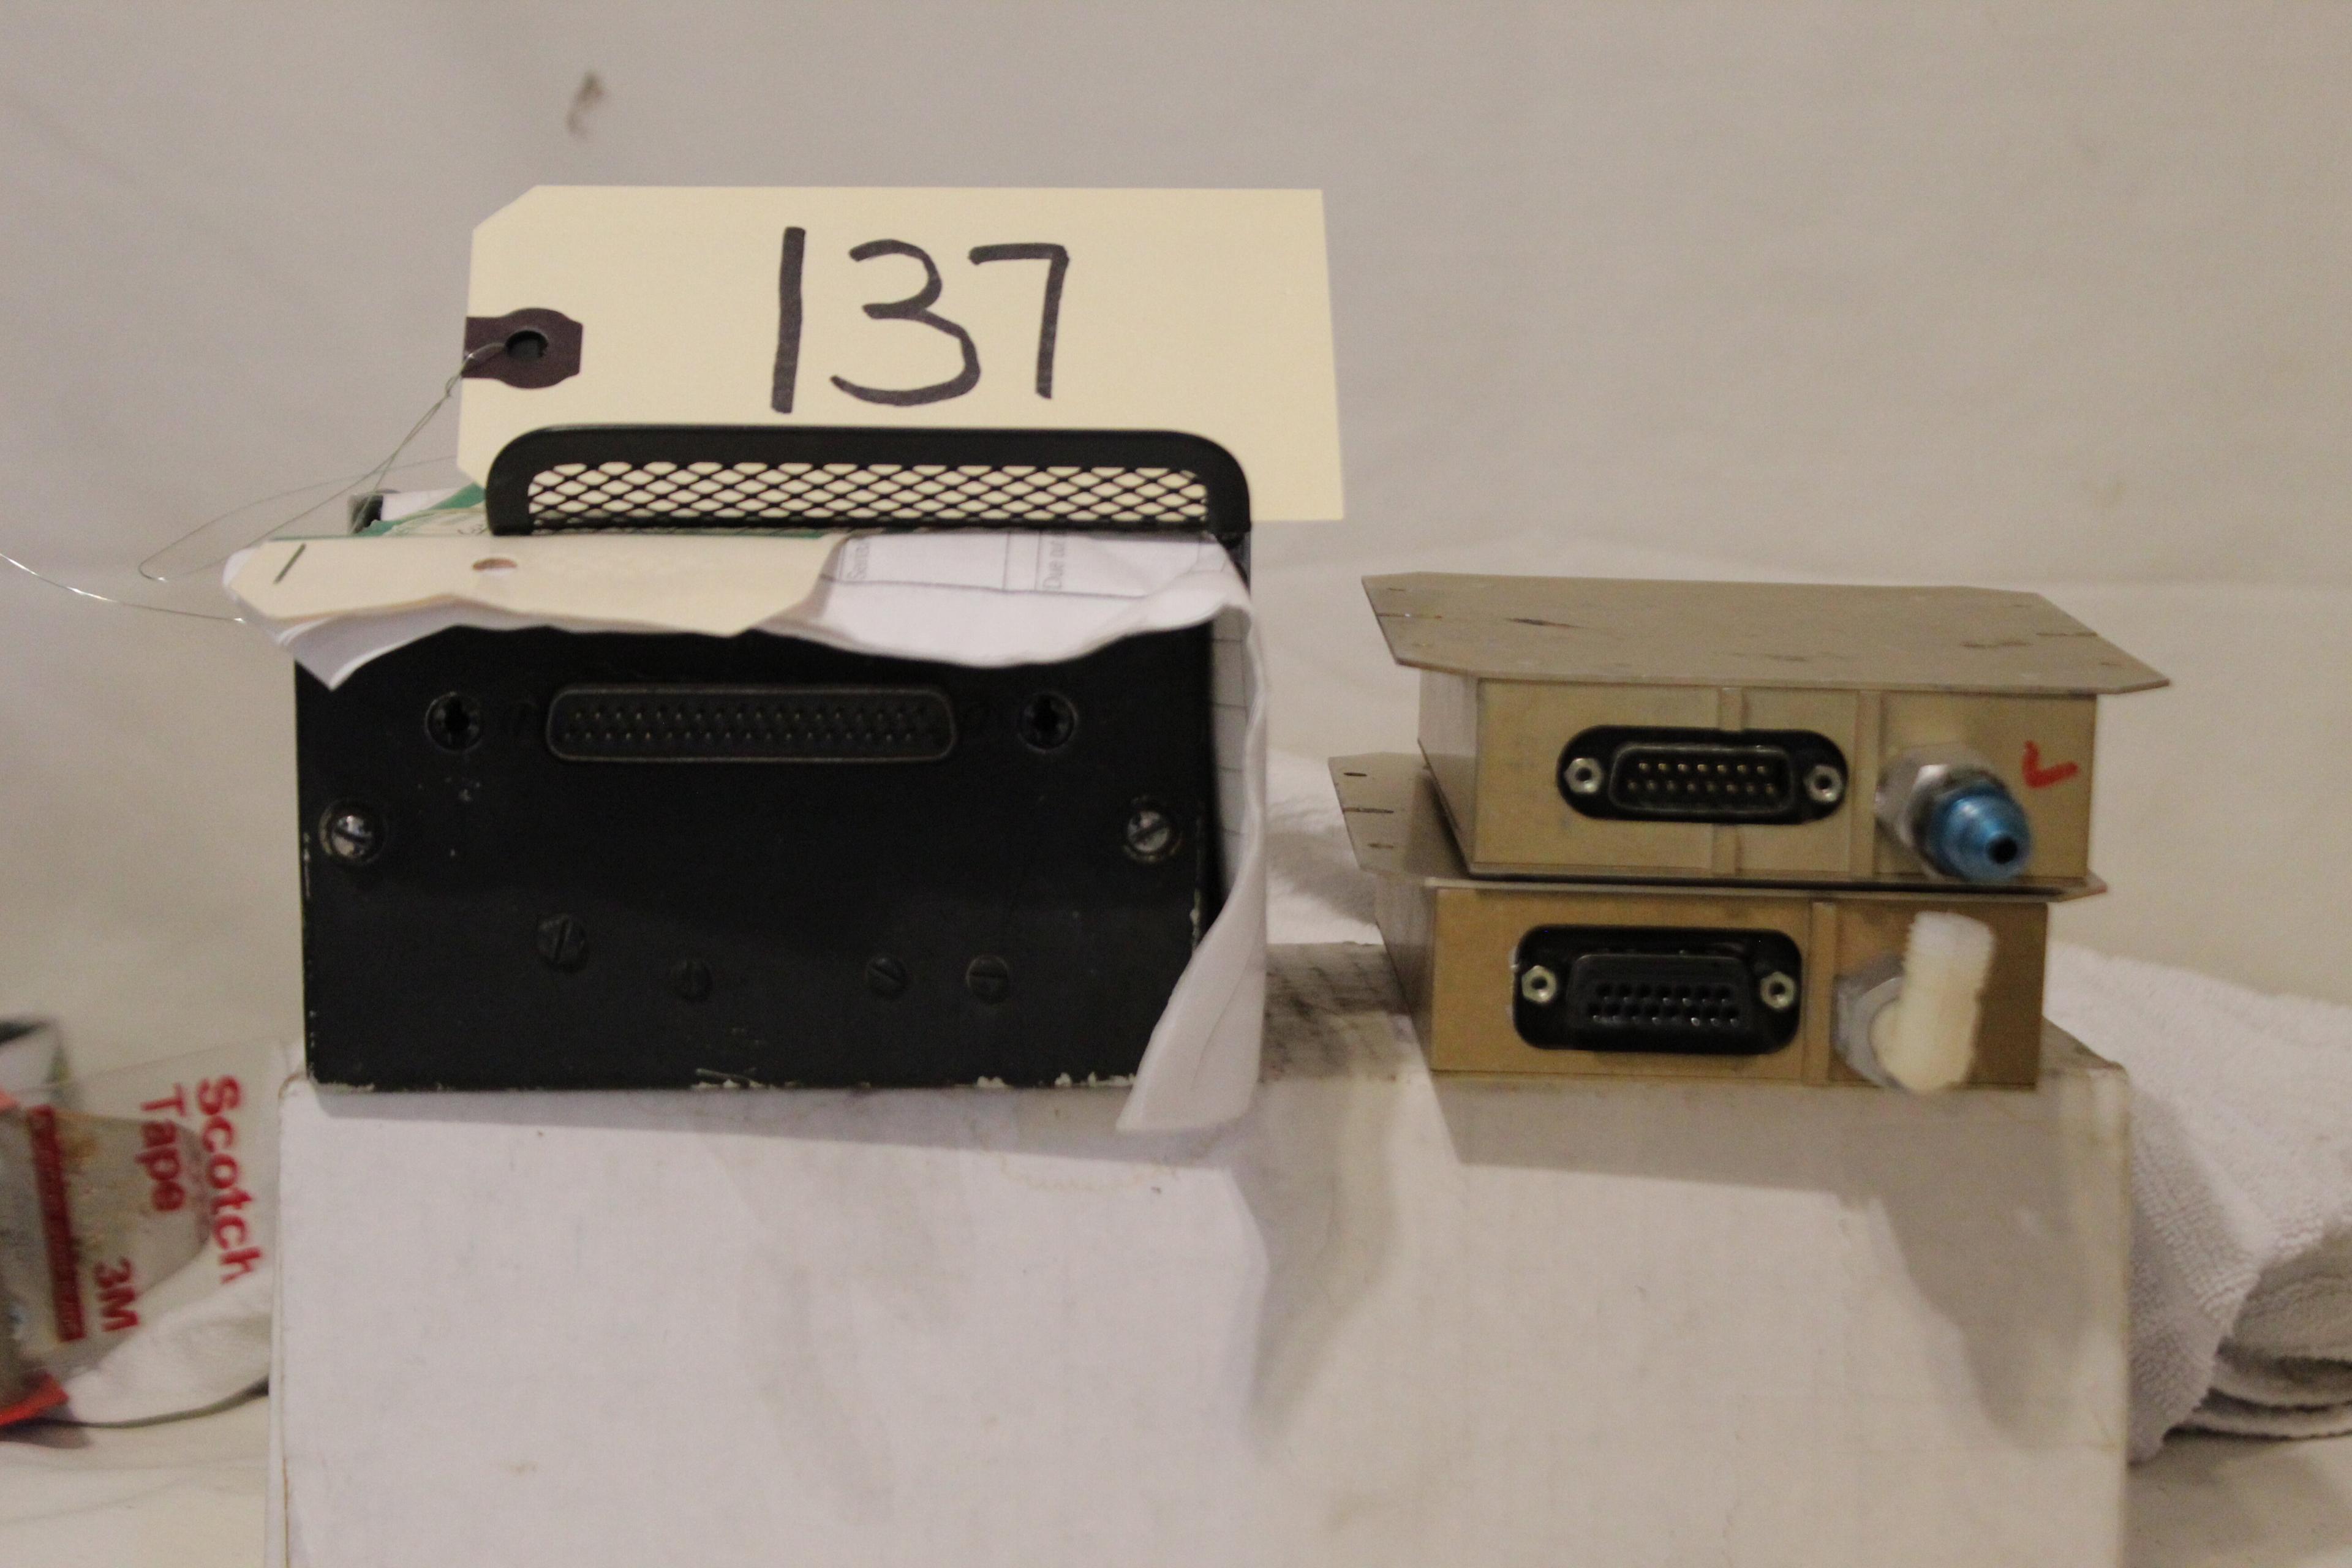 Lot Of 3 Intercommunication Set Pn C-1611d/aic/ & 2 Tci Altitude Digitizers Model Ssd120-xxa